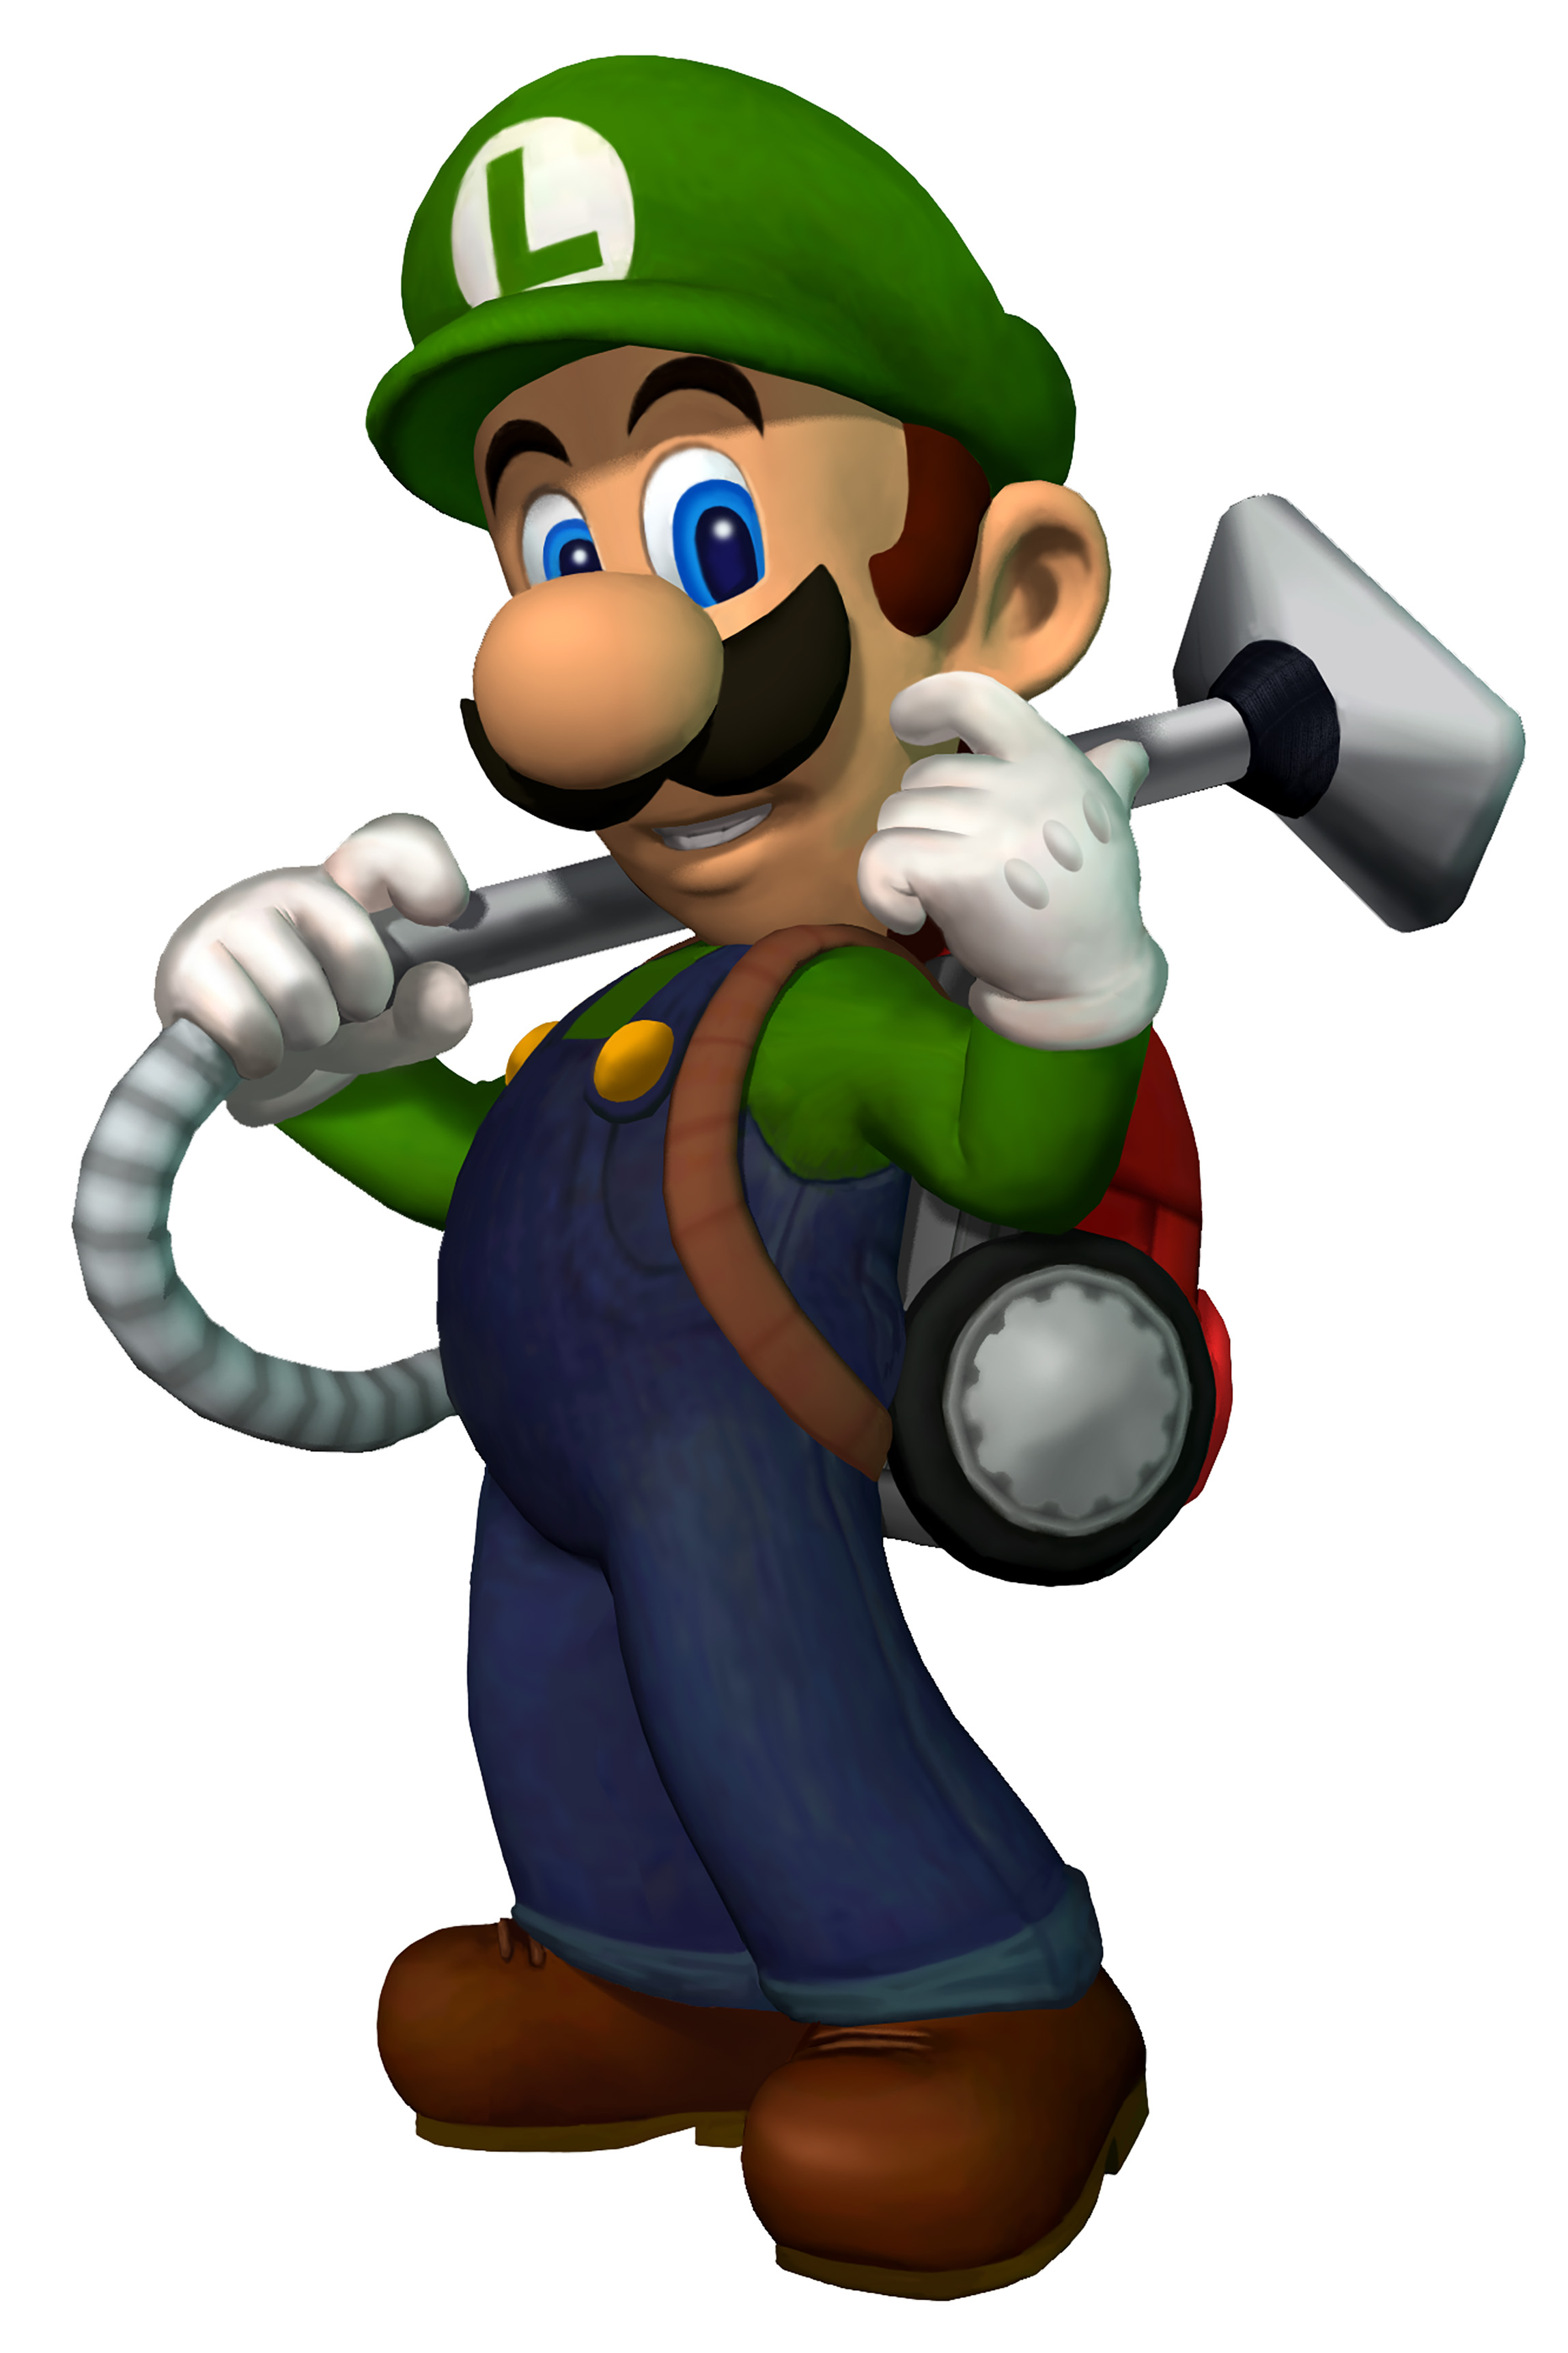 Luigi's Mansion art - Nintendo Everything2296 x 3445